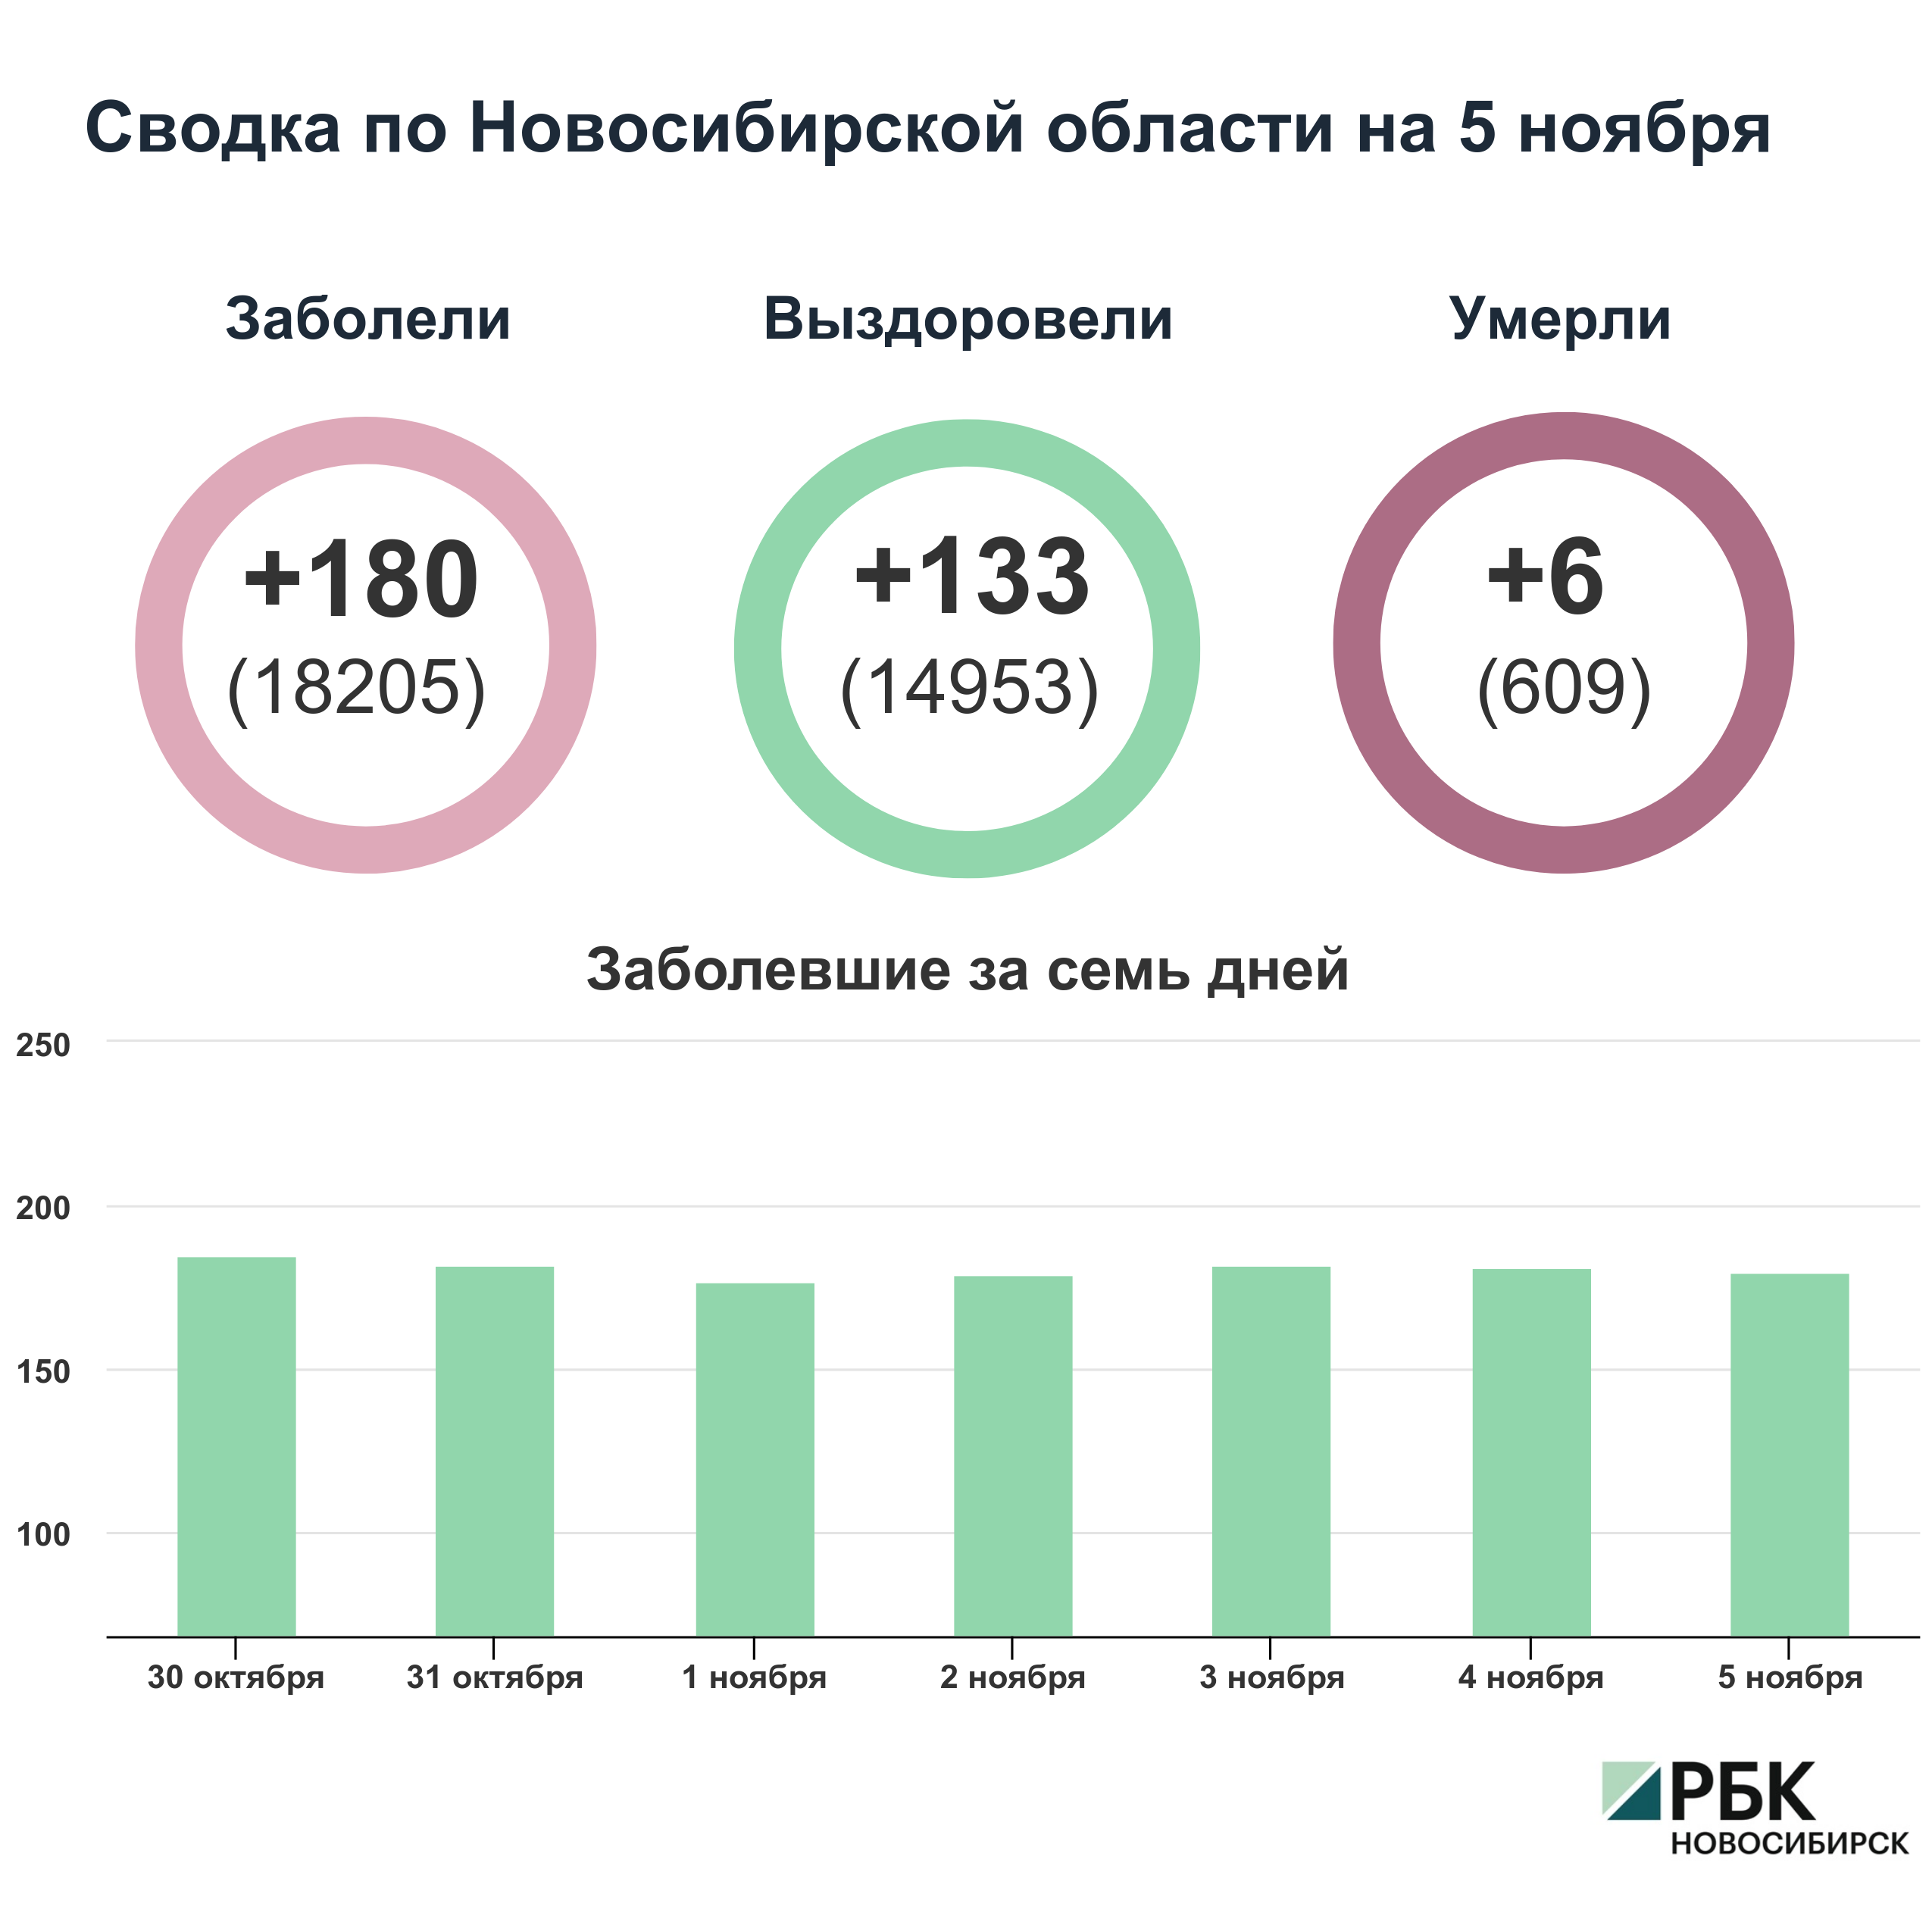 Коронавирус в Новосибирске: сводка на 5 ноября